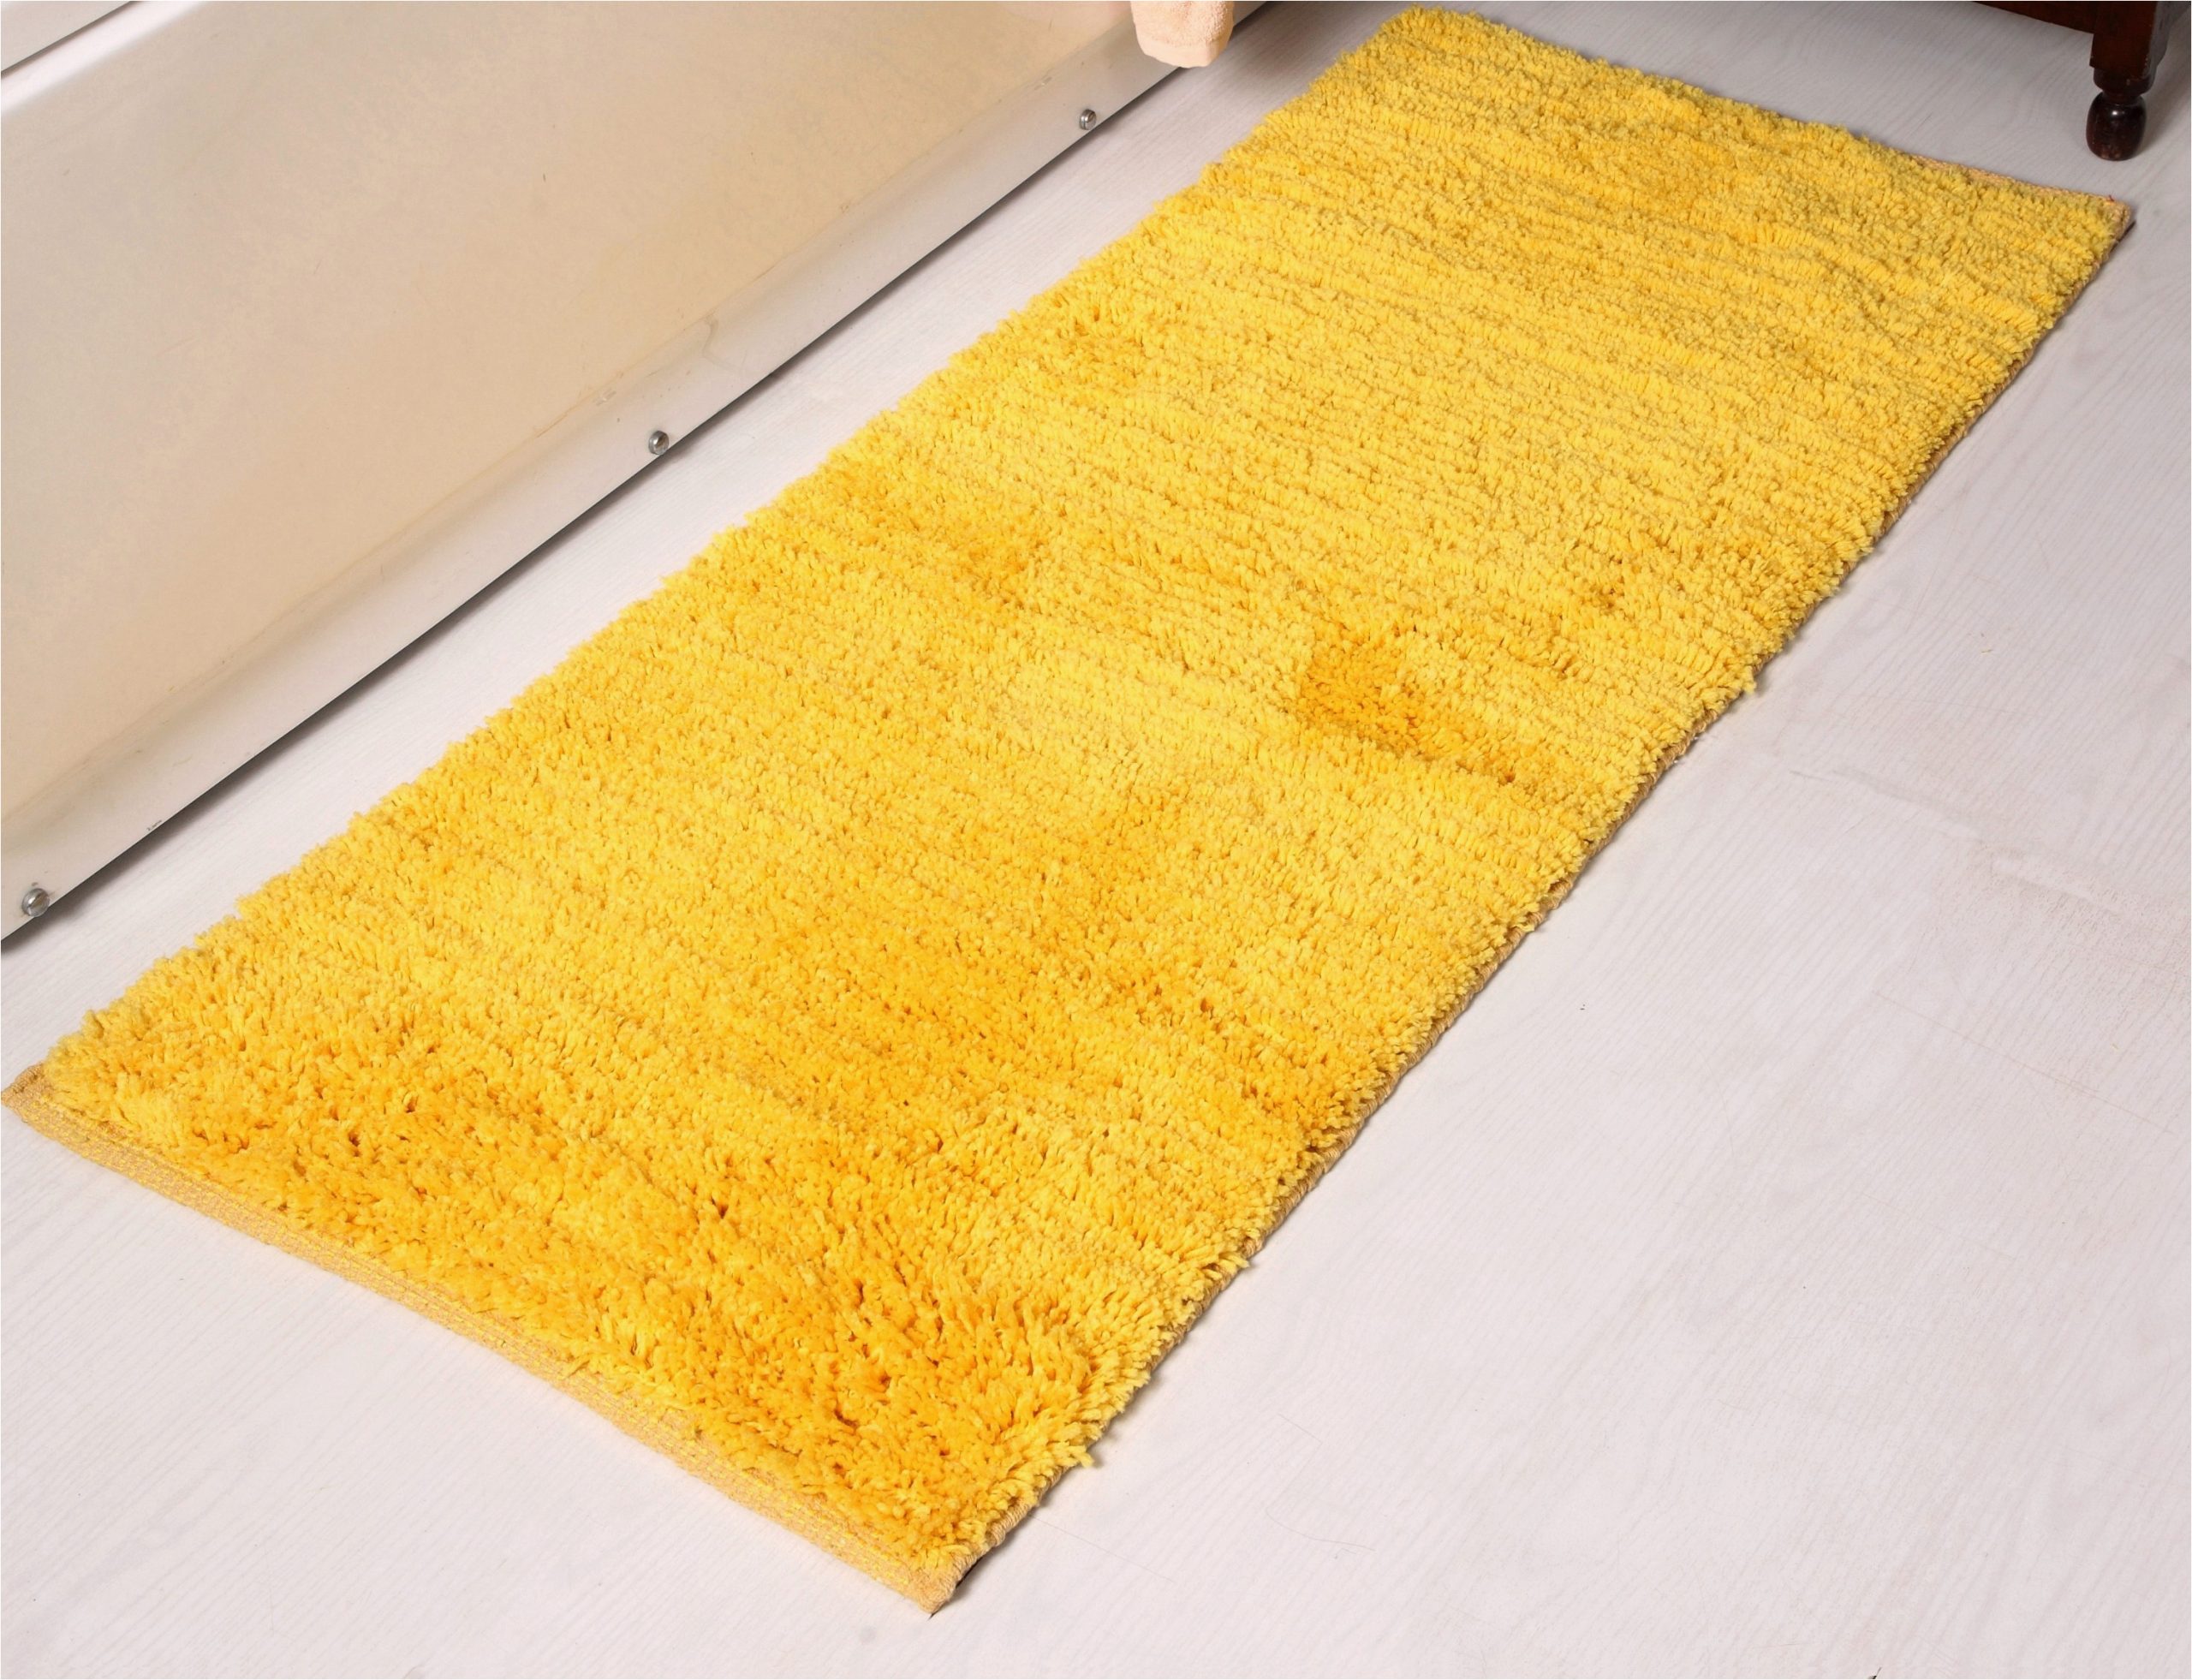 Yellow Bath Rugs Walmart Addy Home Plush Collection Bath Rug or Runner – Yellow (24 In X 60 In)